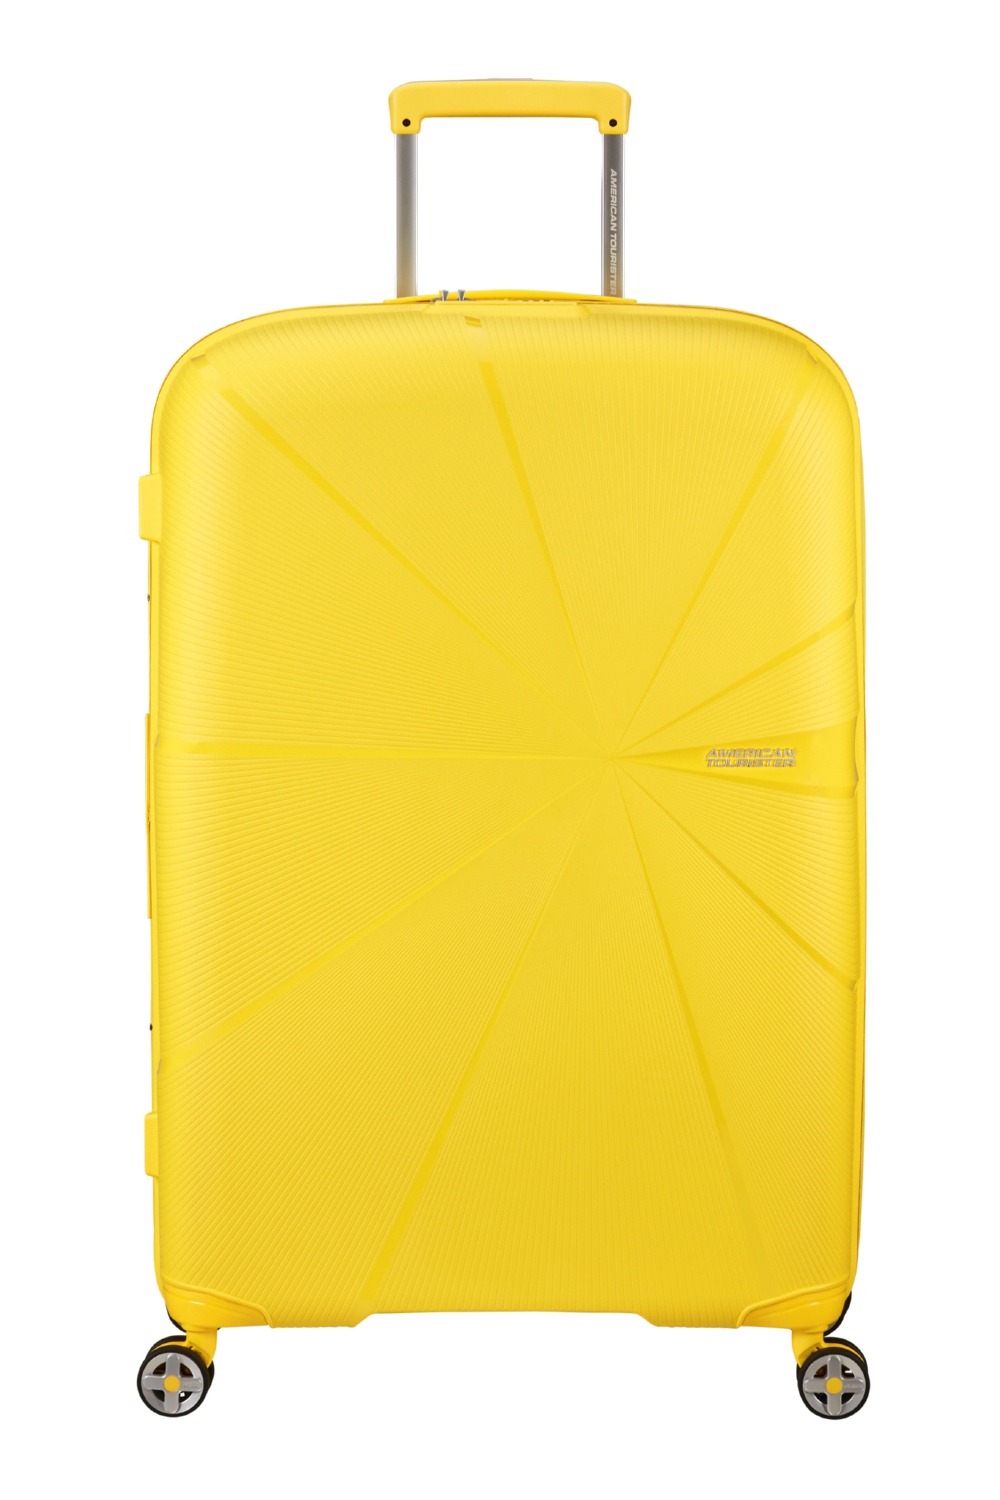 Валіза American Tourister Starvibe MD5*06004 велика жовта з розширенням